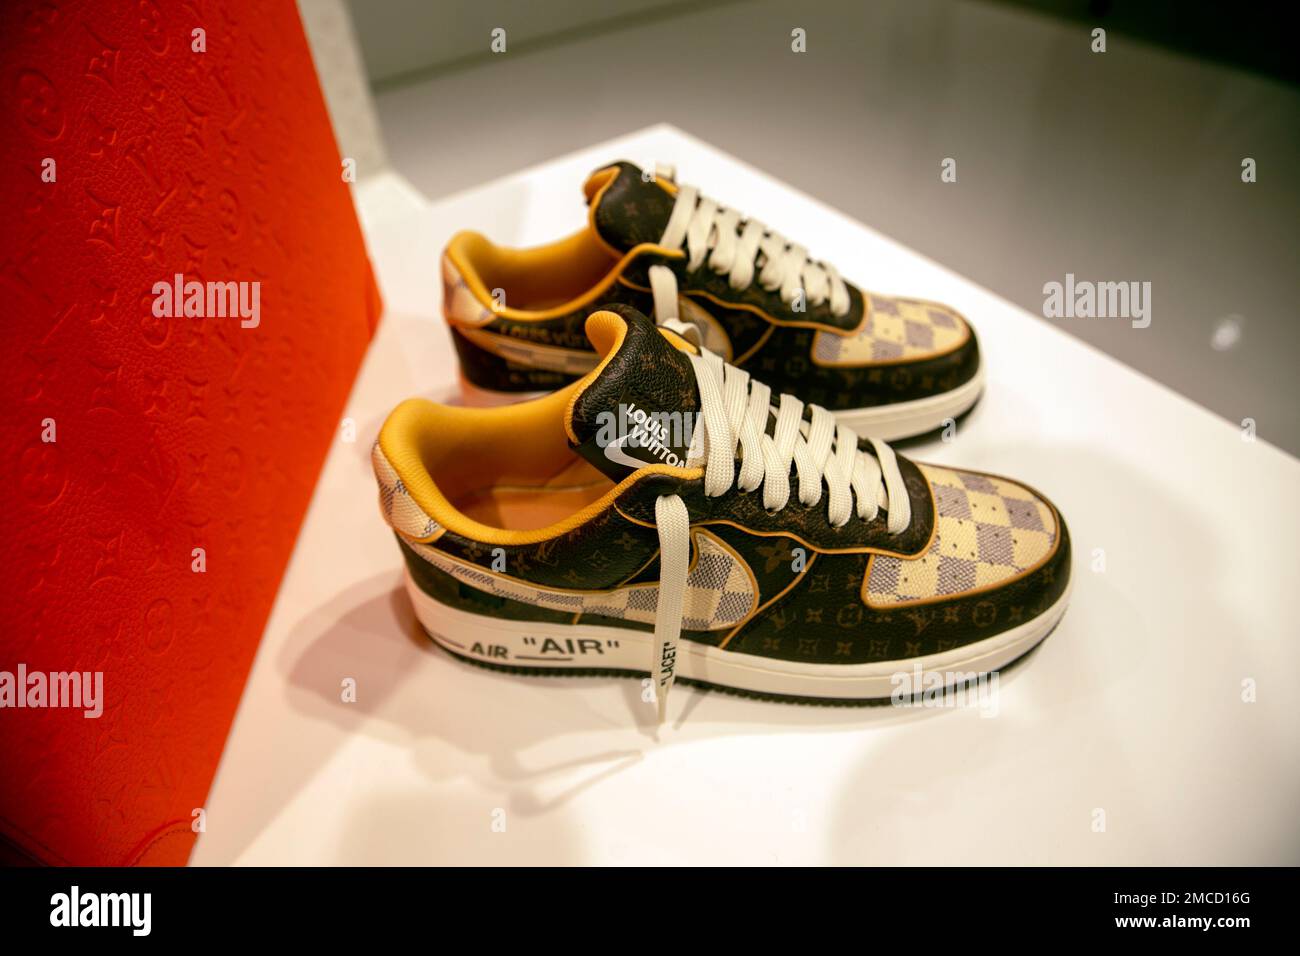 Sotheby's to Auction Virgil Abloh's Louis Vuitton x Nike Air Force 1s